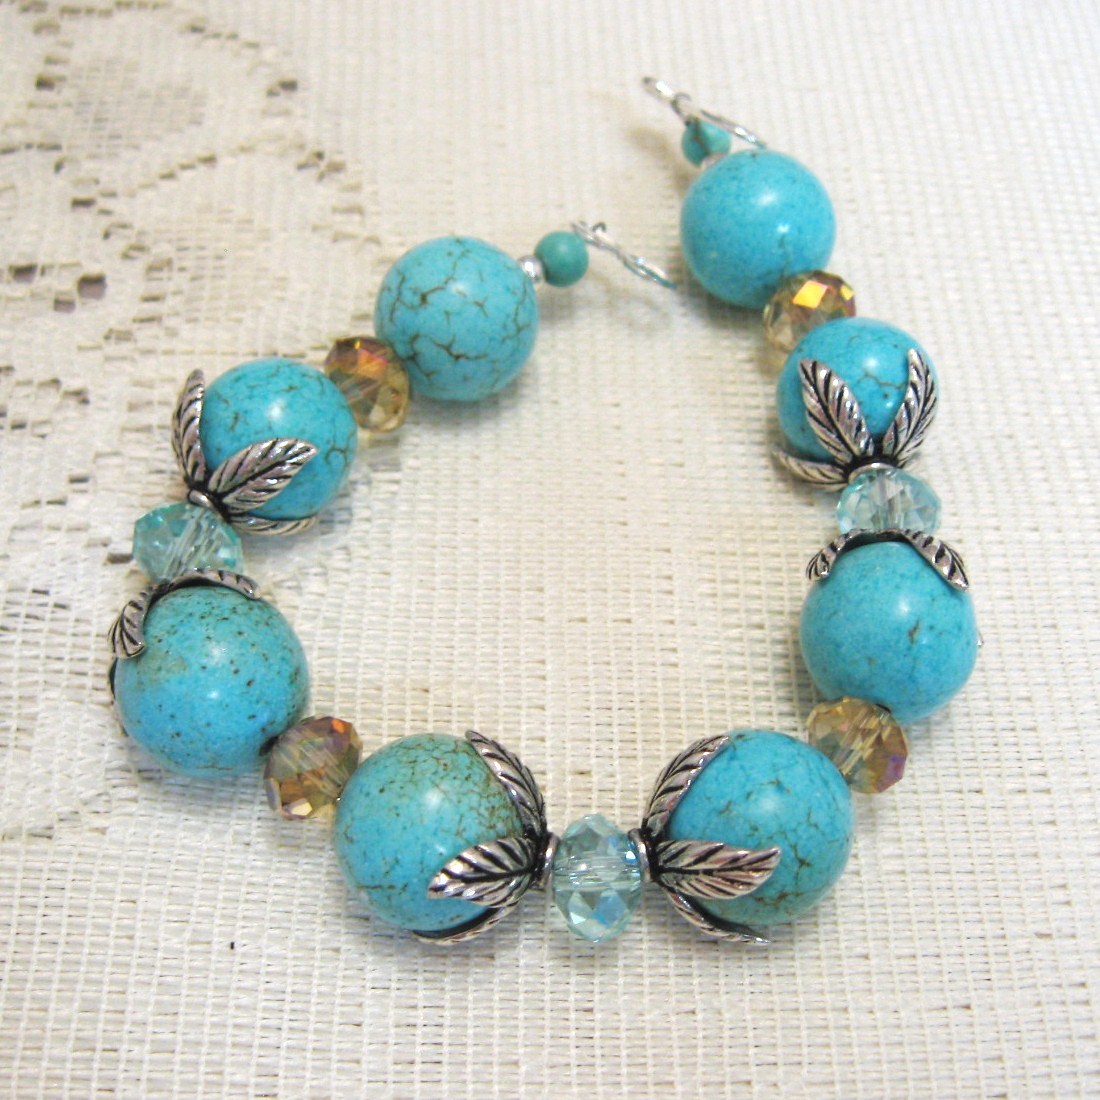 Turquoise Magnesite and Crystal Bracelet, Handmade - $24.00